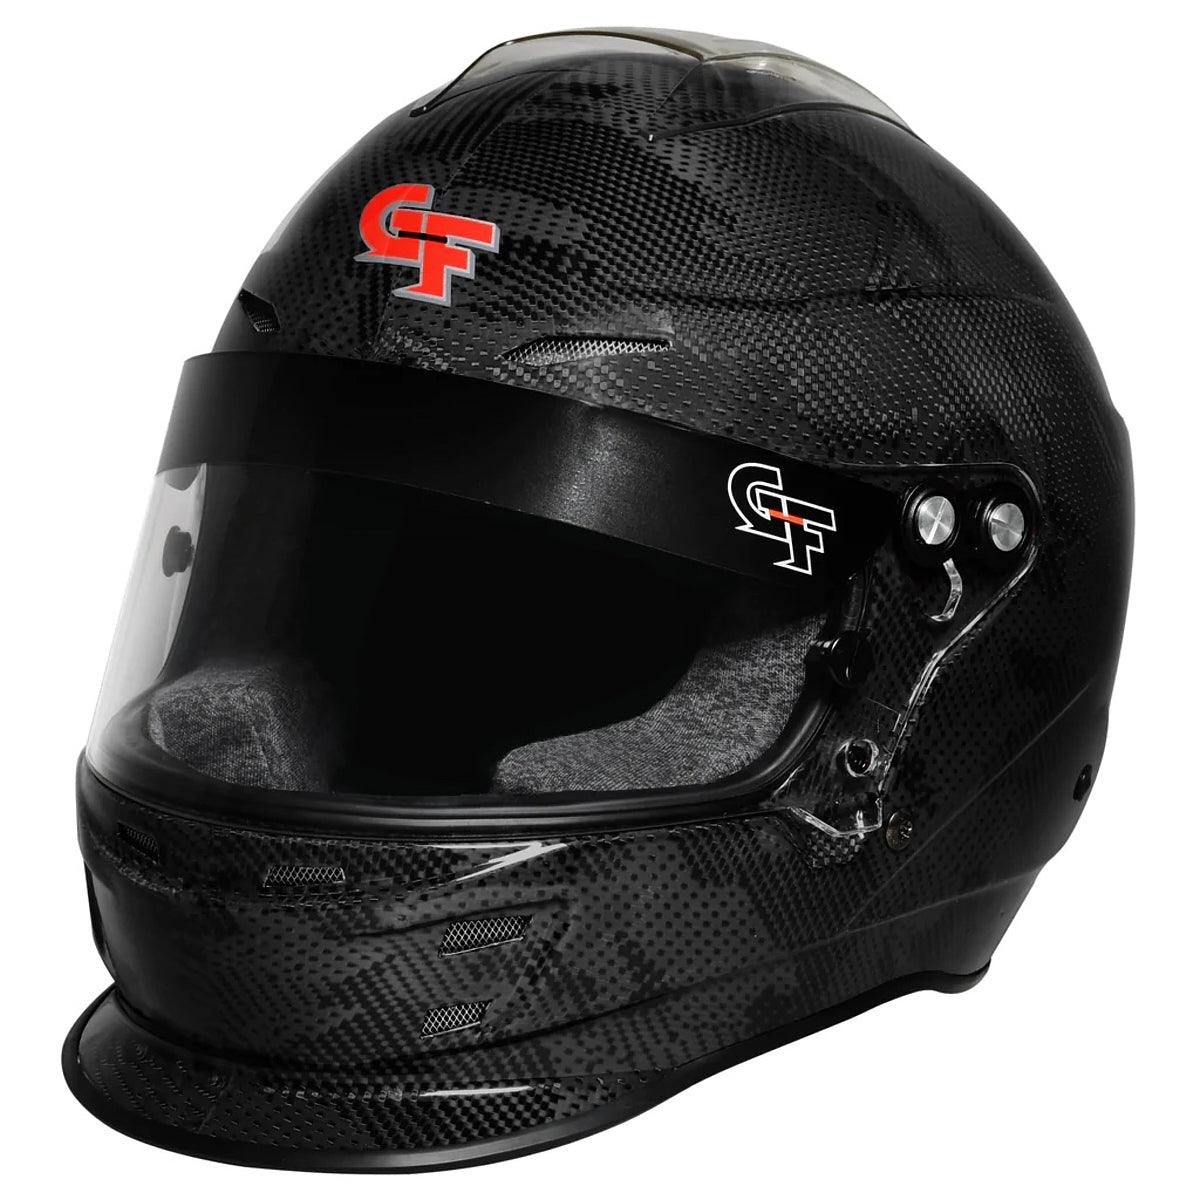 Helmet Nova Fusion XX-Large Black SA2020 - Burlile Performance Products